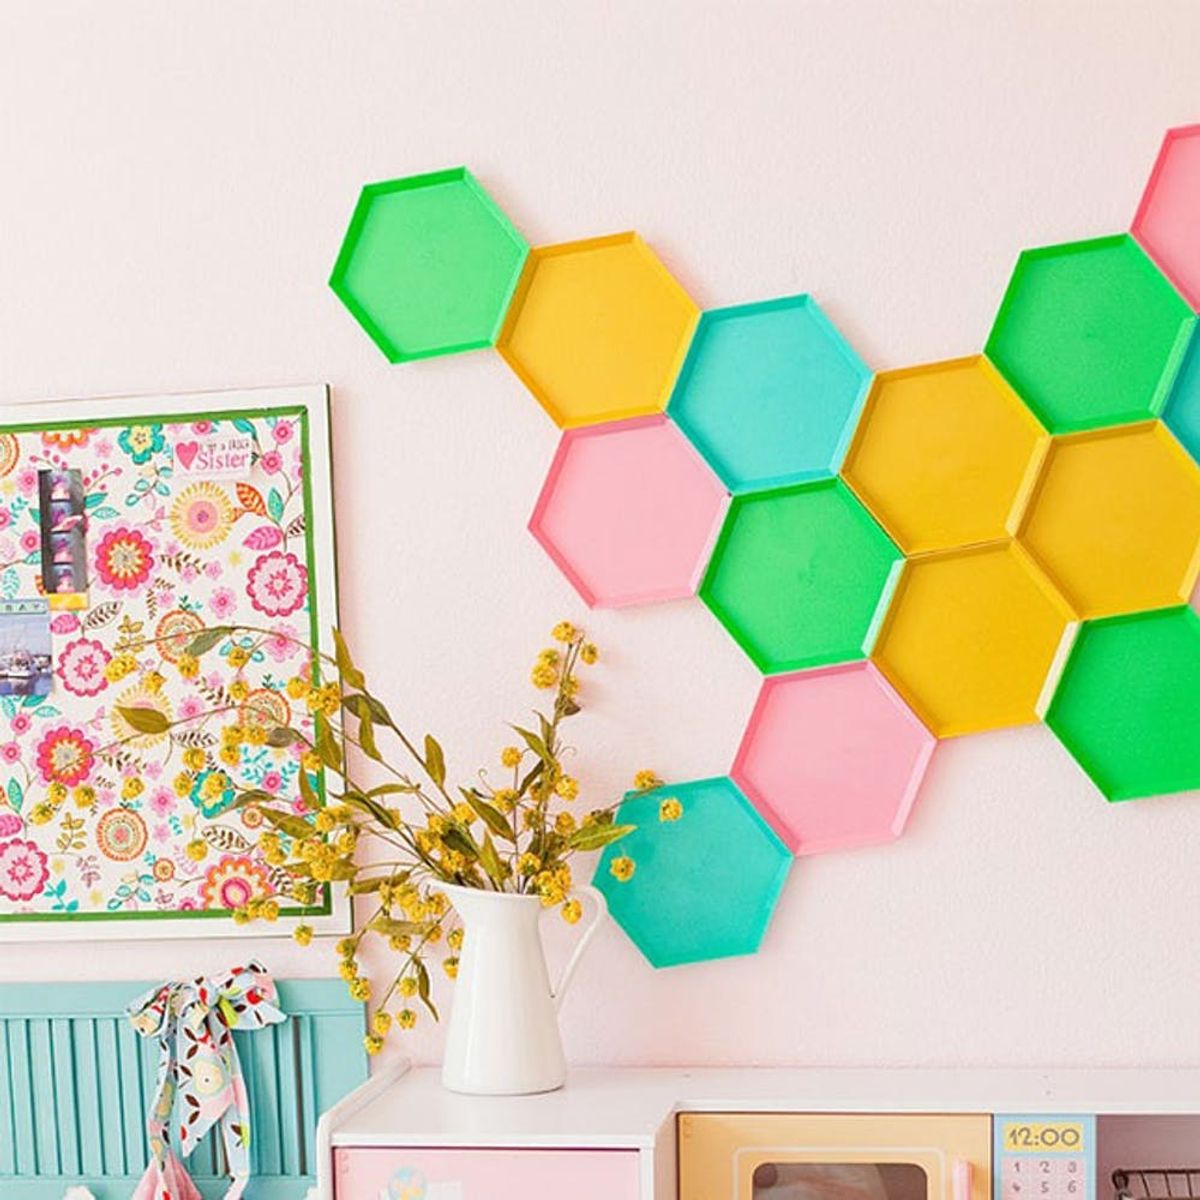 13 Wall Art Nursery Ideas to DIY